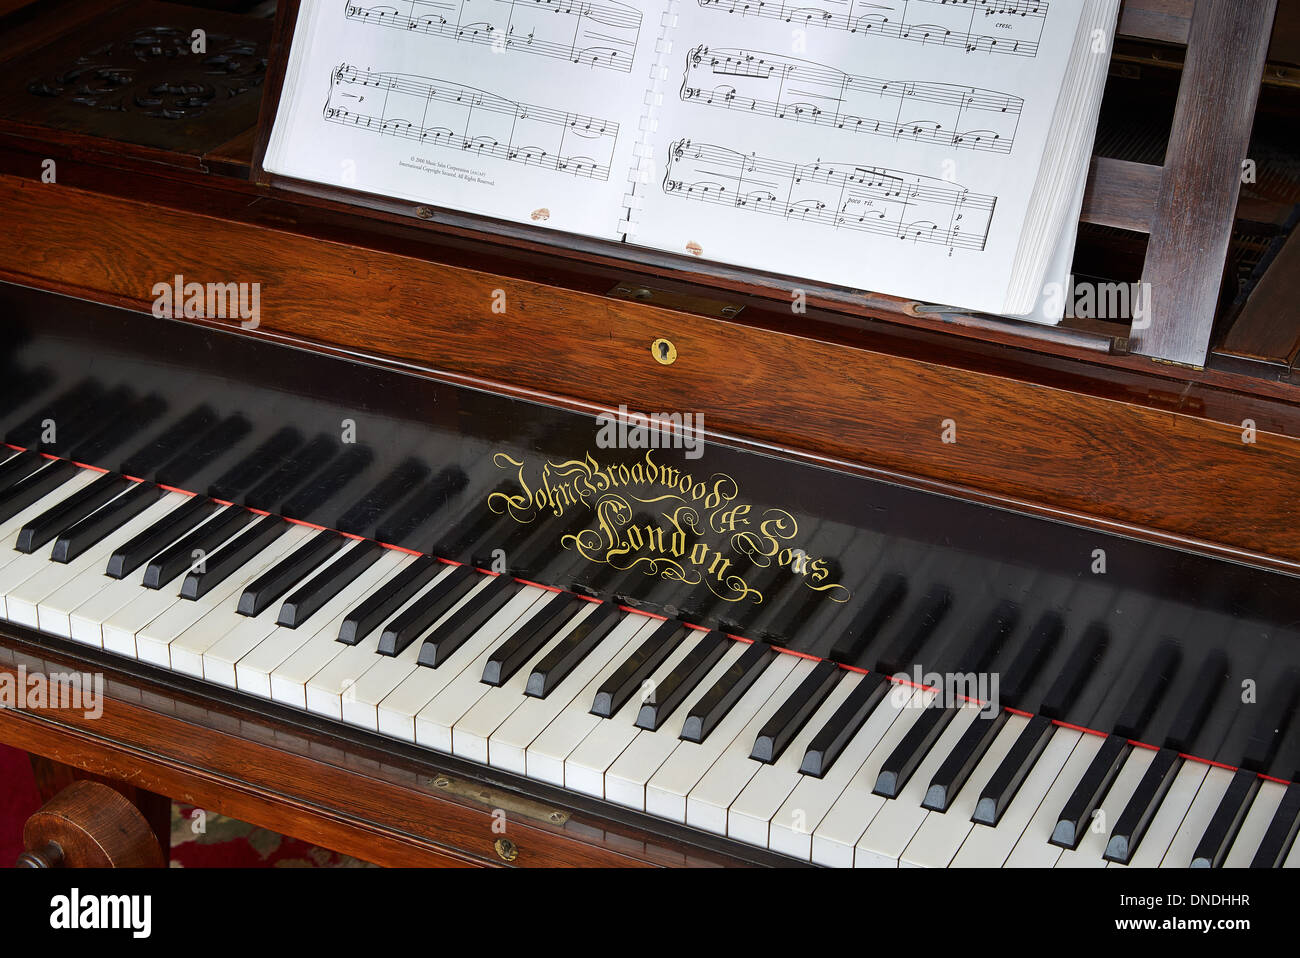 Piano keyboard by John Broadwood and Sons of London UK Stock Photo